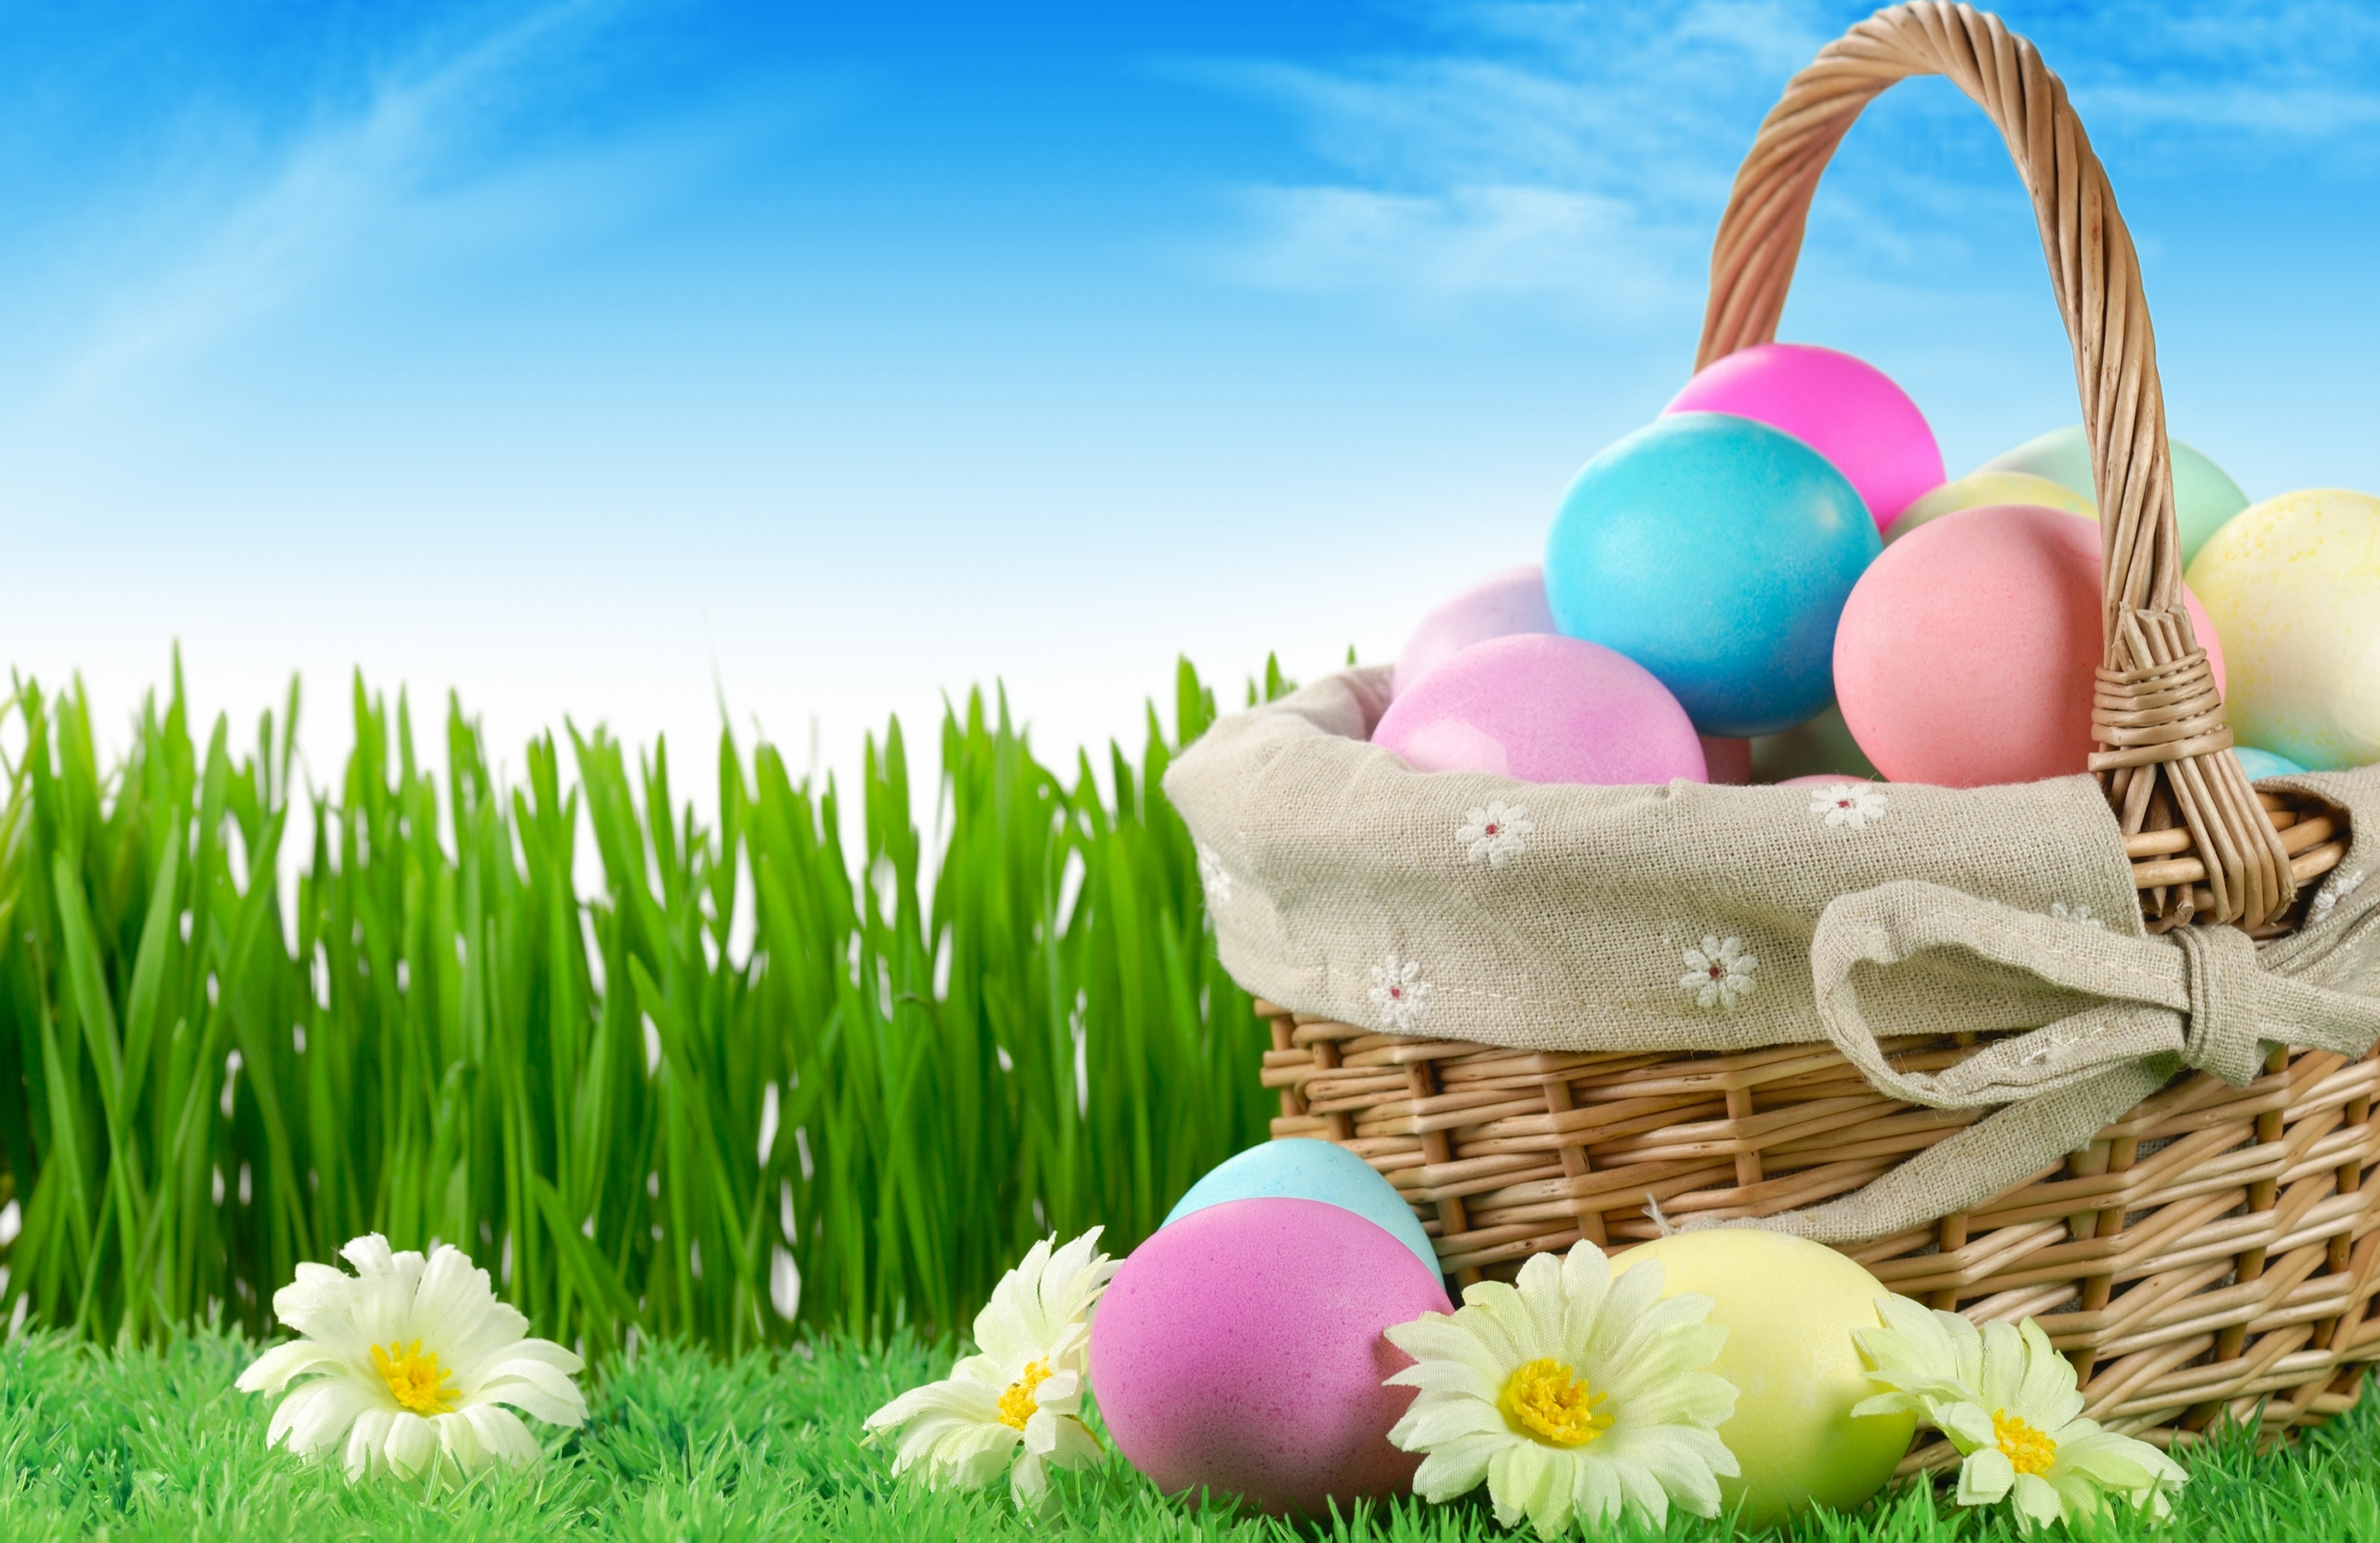 Easter Backgrounds collection download free | PixelsTalk.Net